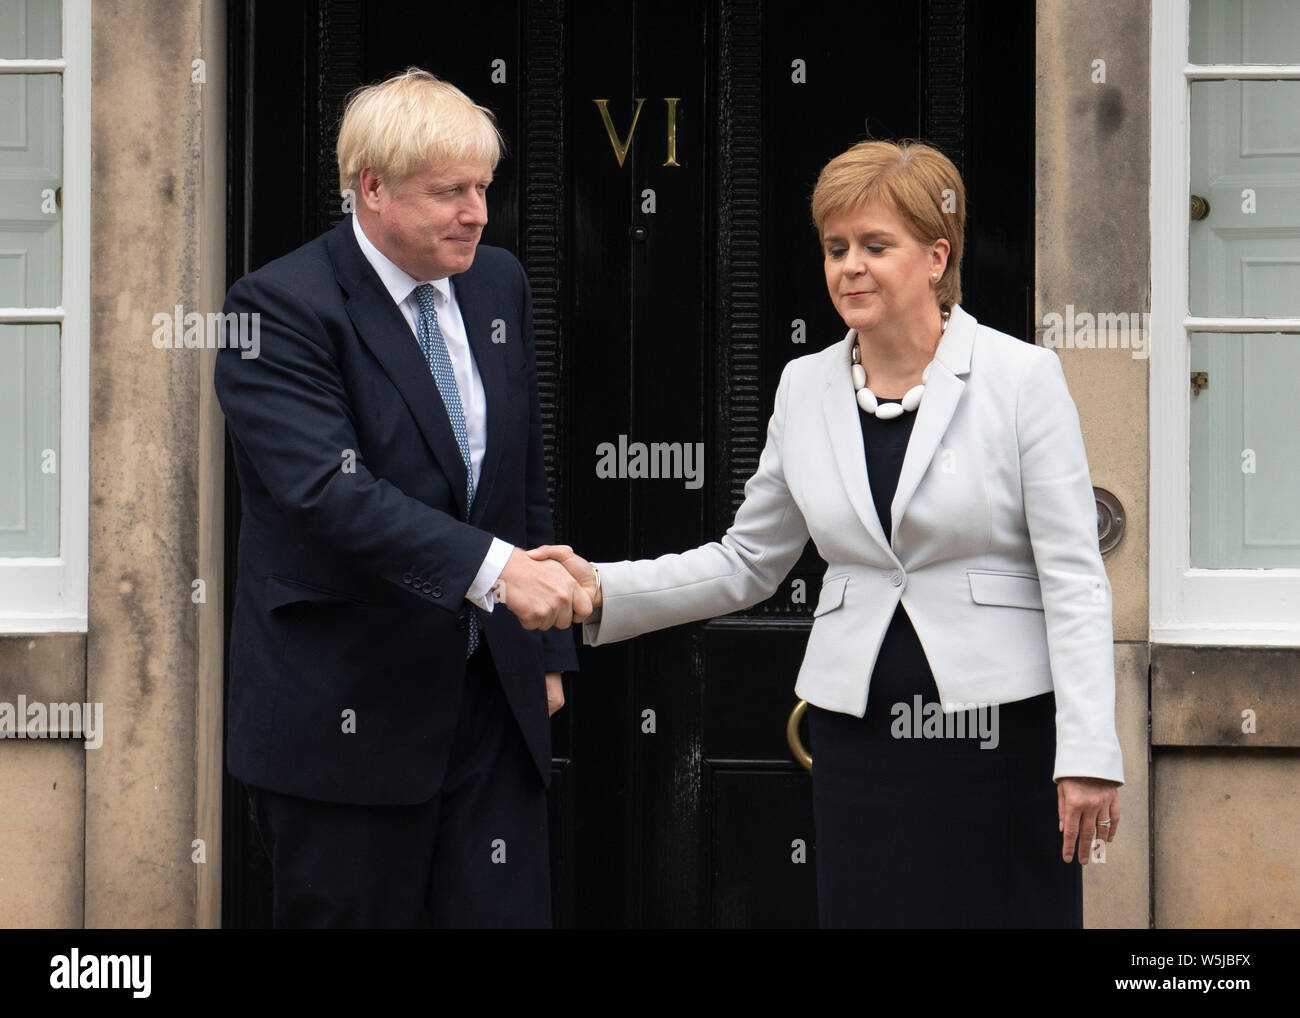 Edinburgh, Scotland, UK. 29th July, 2019. Prime Minister Boris Johnson meets Scotland's First Minister Nicola Sturgeon at Bute House in Edinburgh on his visit to Scotland. Credit: Iain Masterton/Alamy Live News Stock Photo